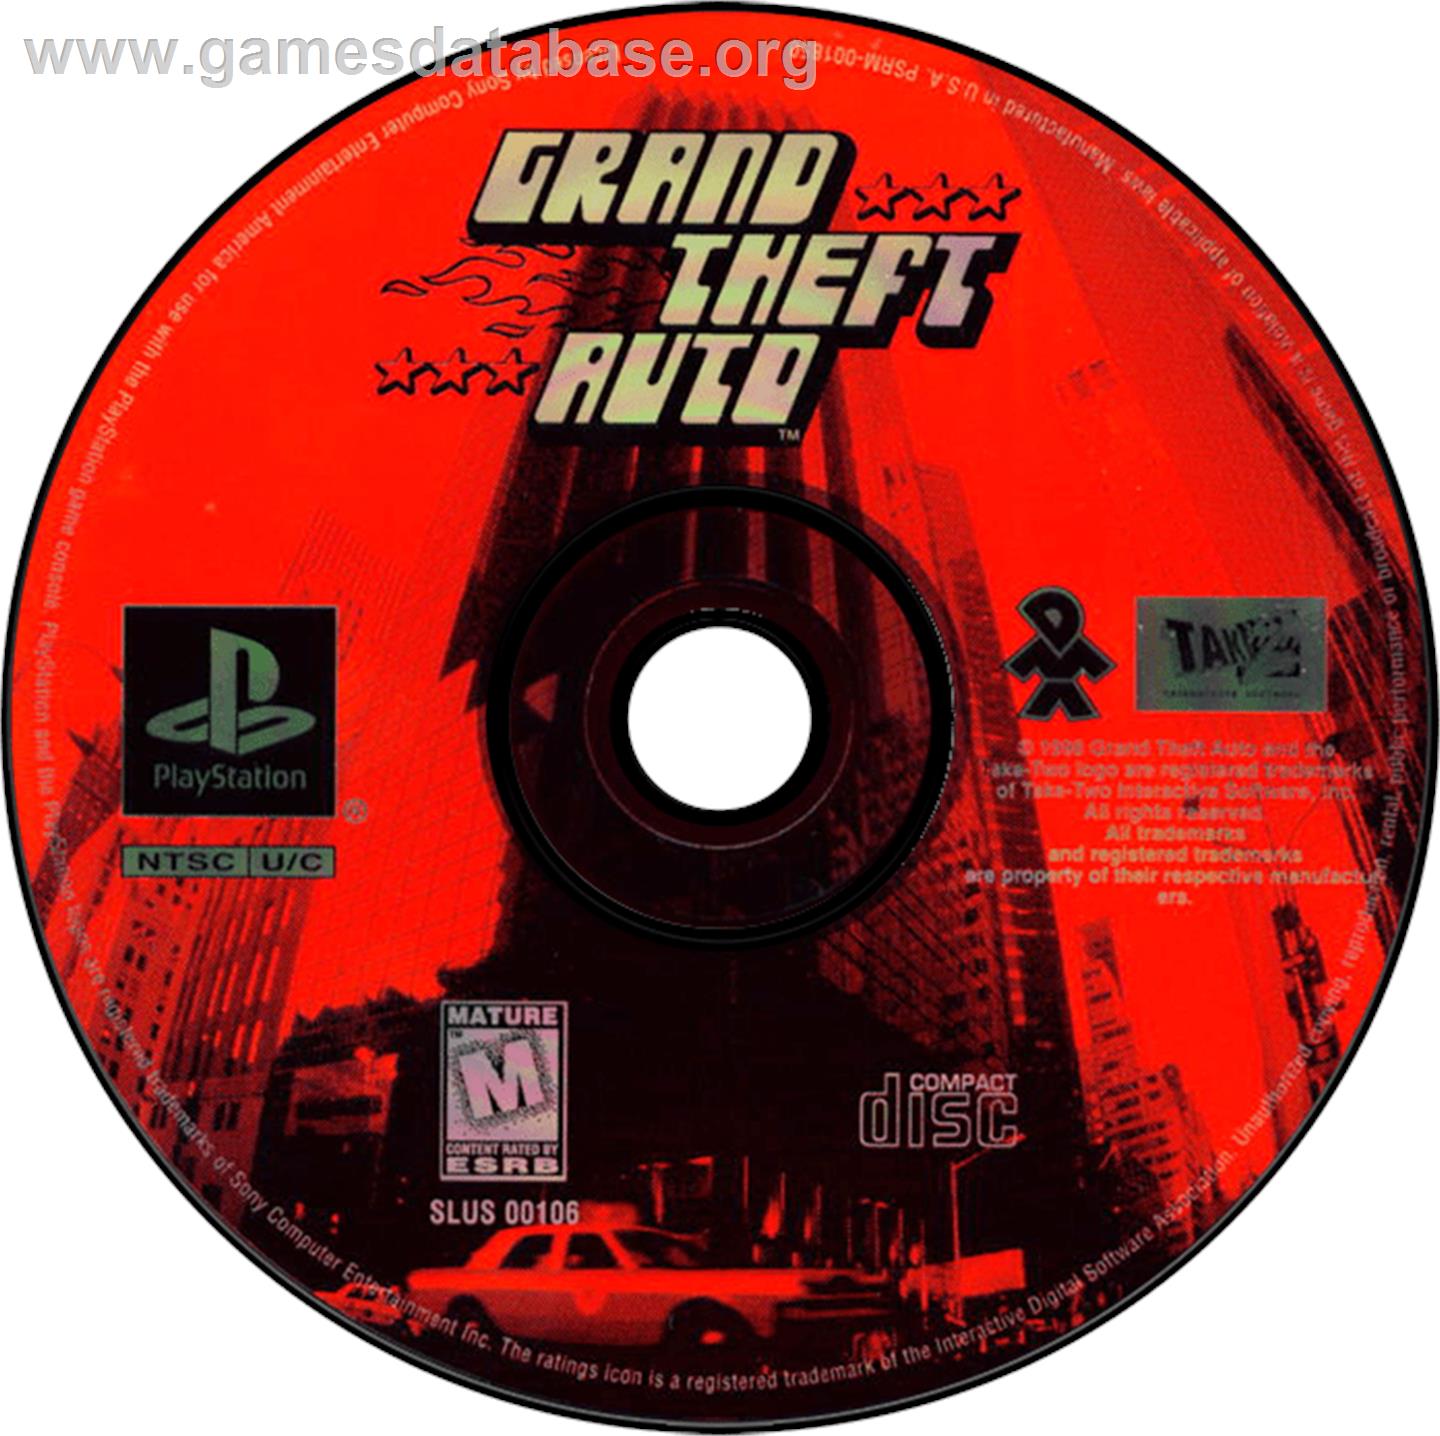 Grand Theft Auto: London 1969 - Sony Playstation - Artwork - Disc